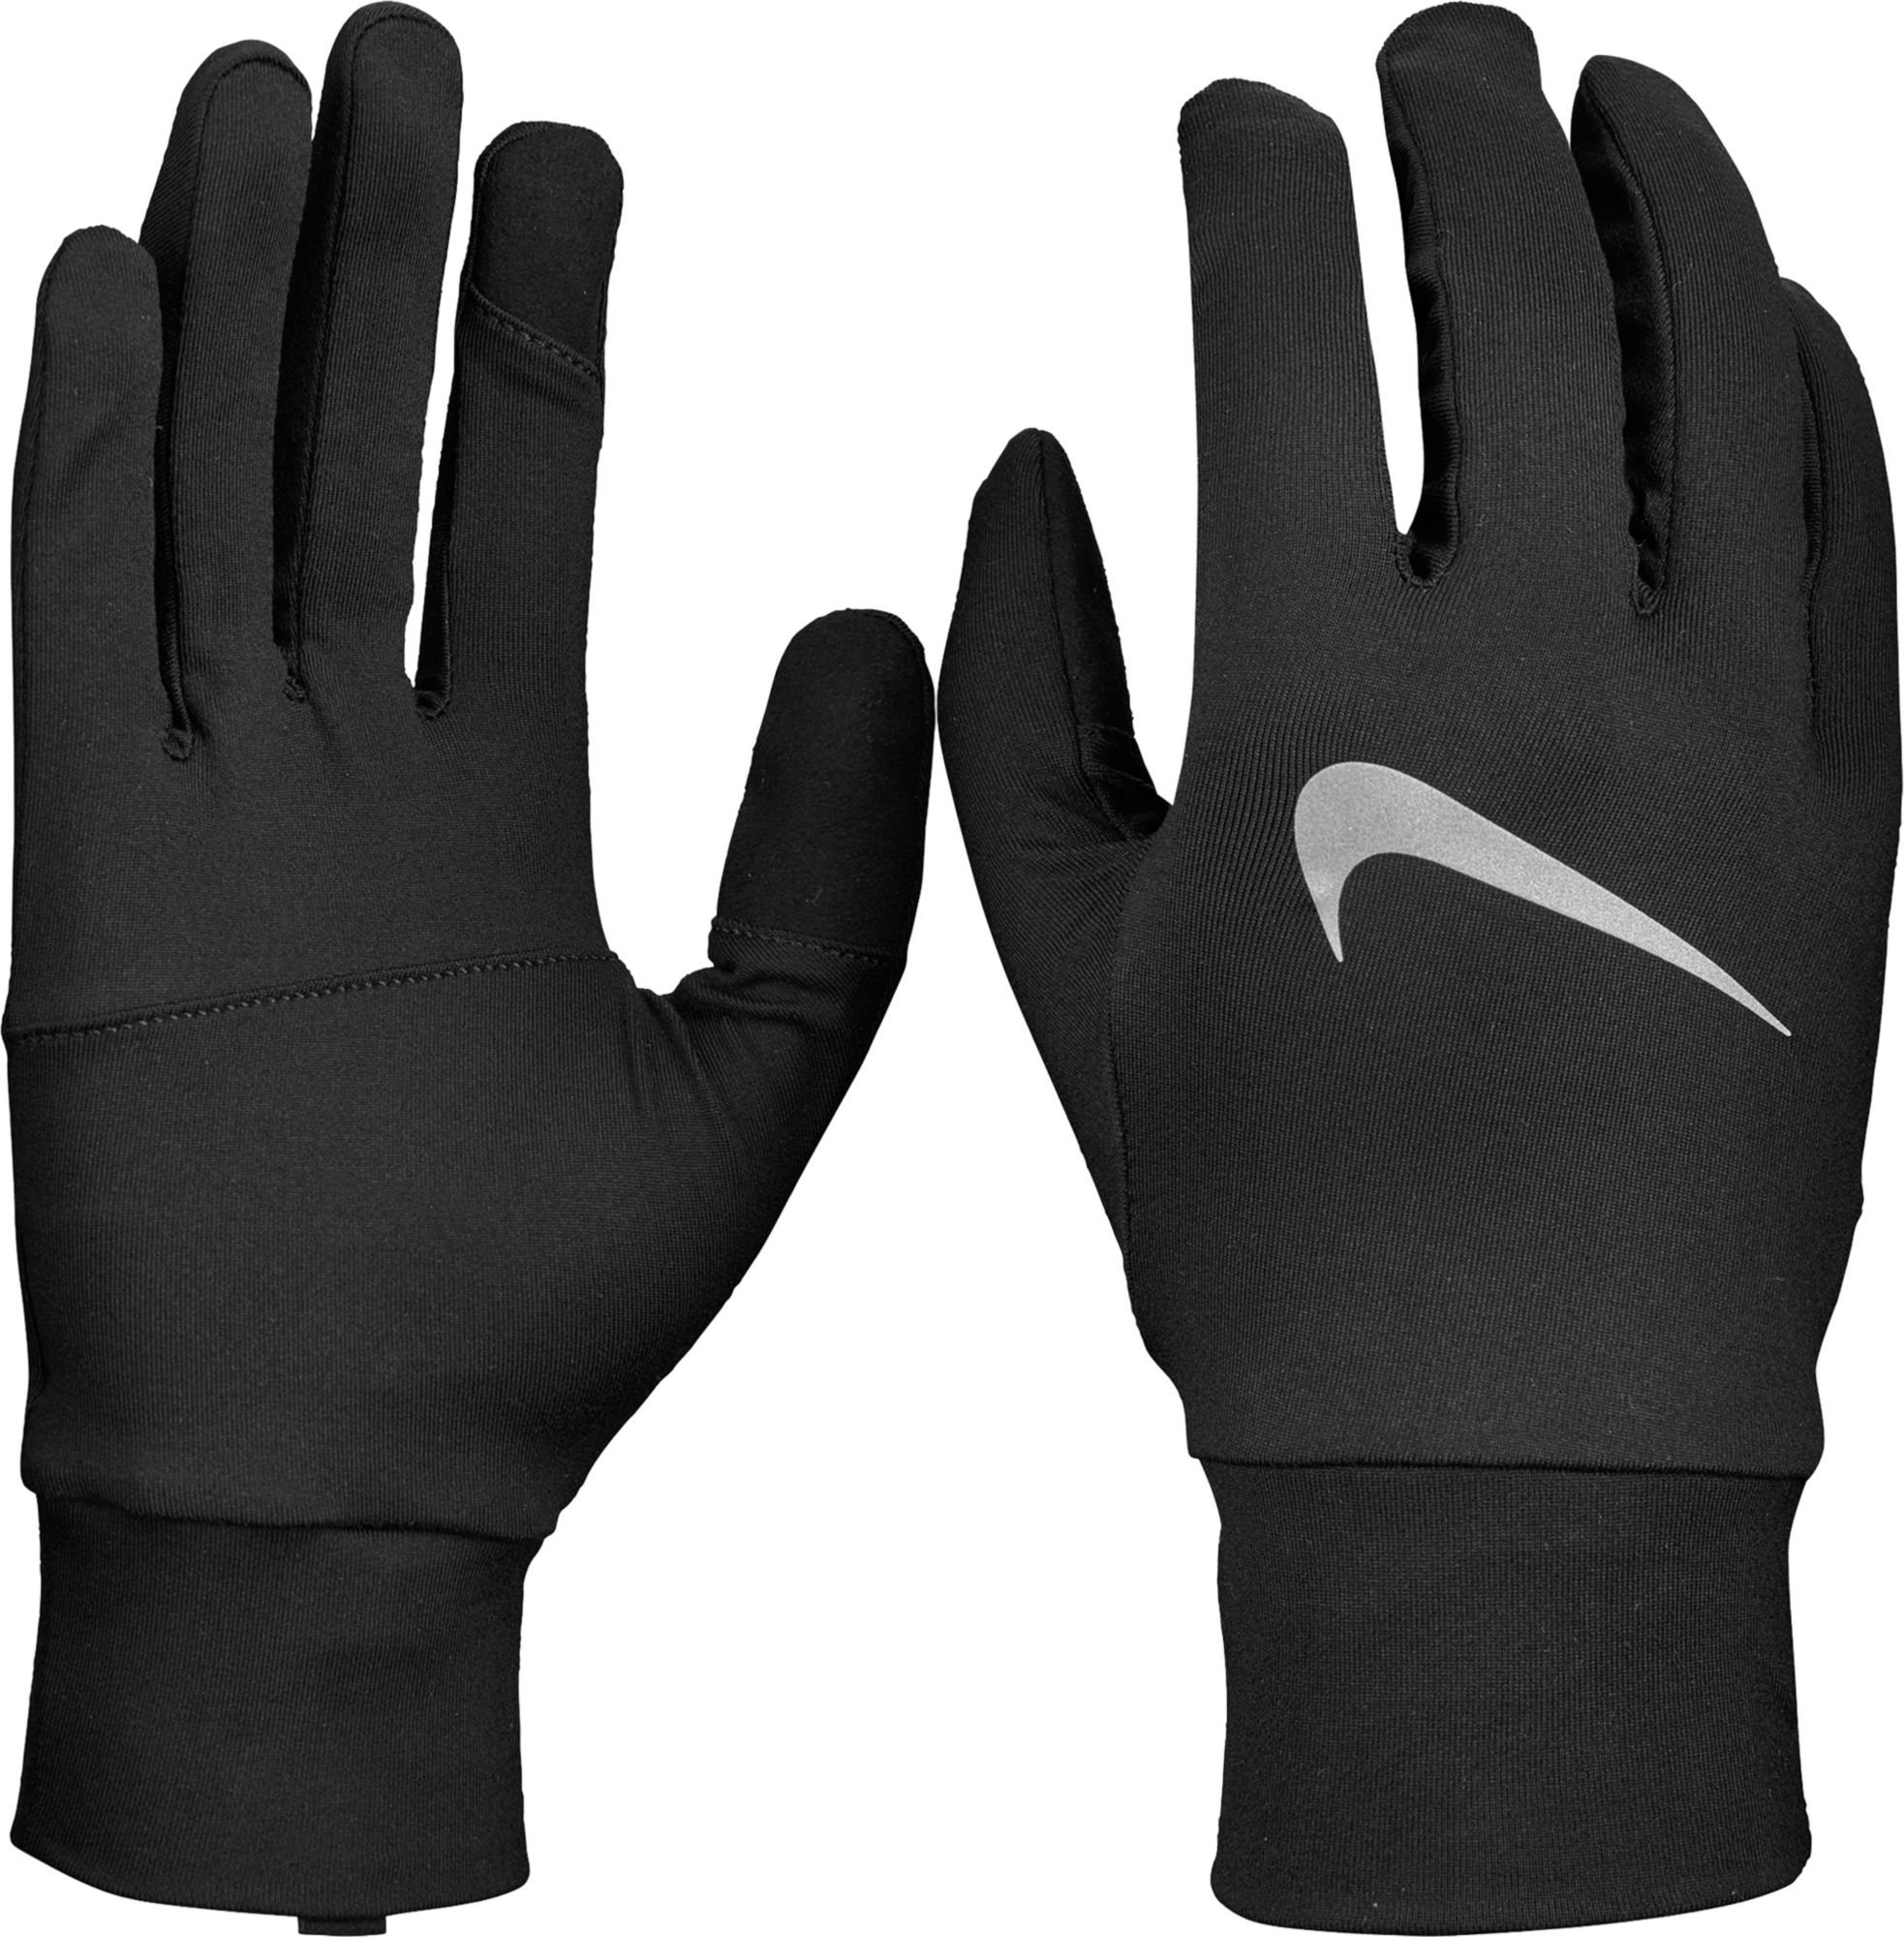 nike thermal running gloves